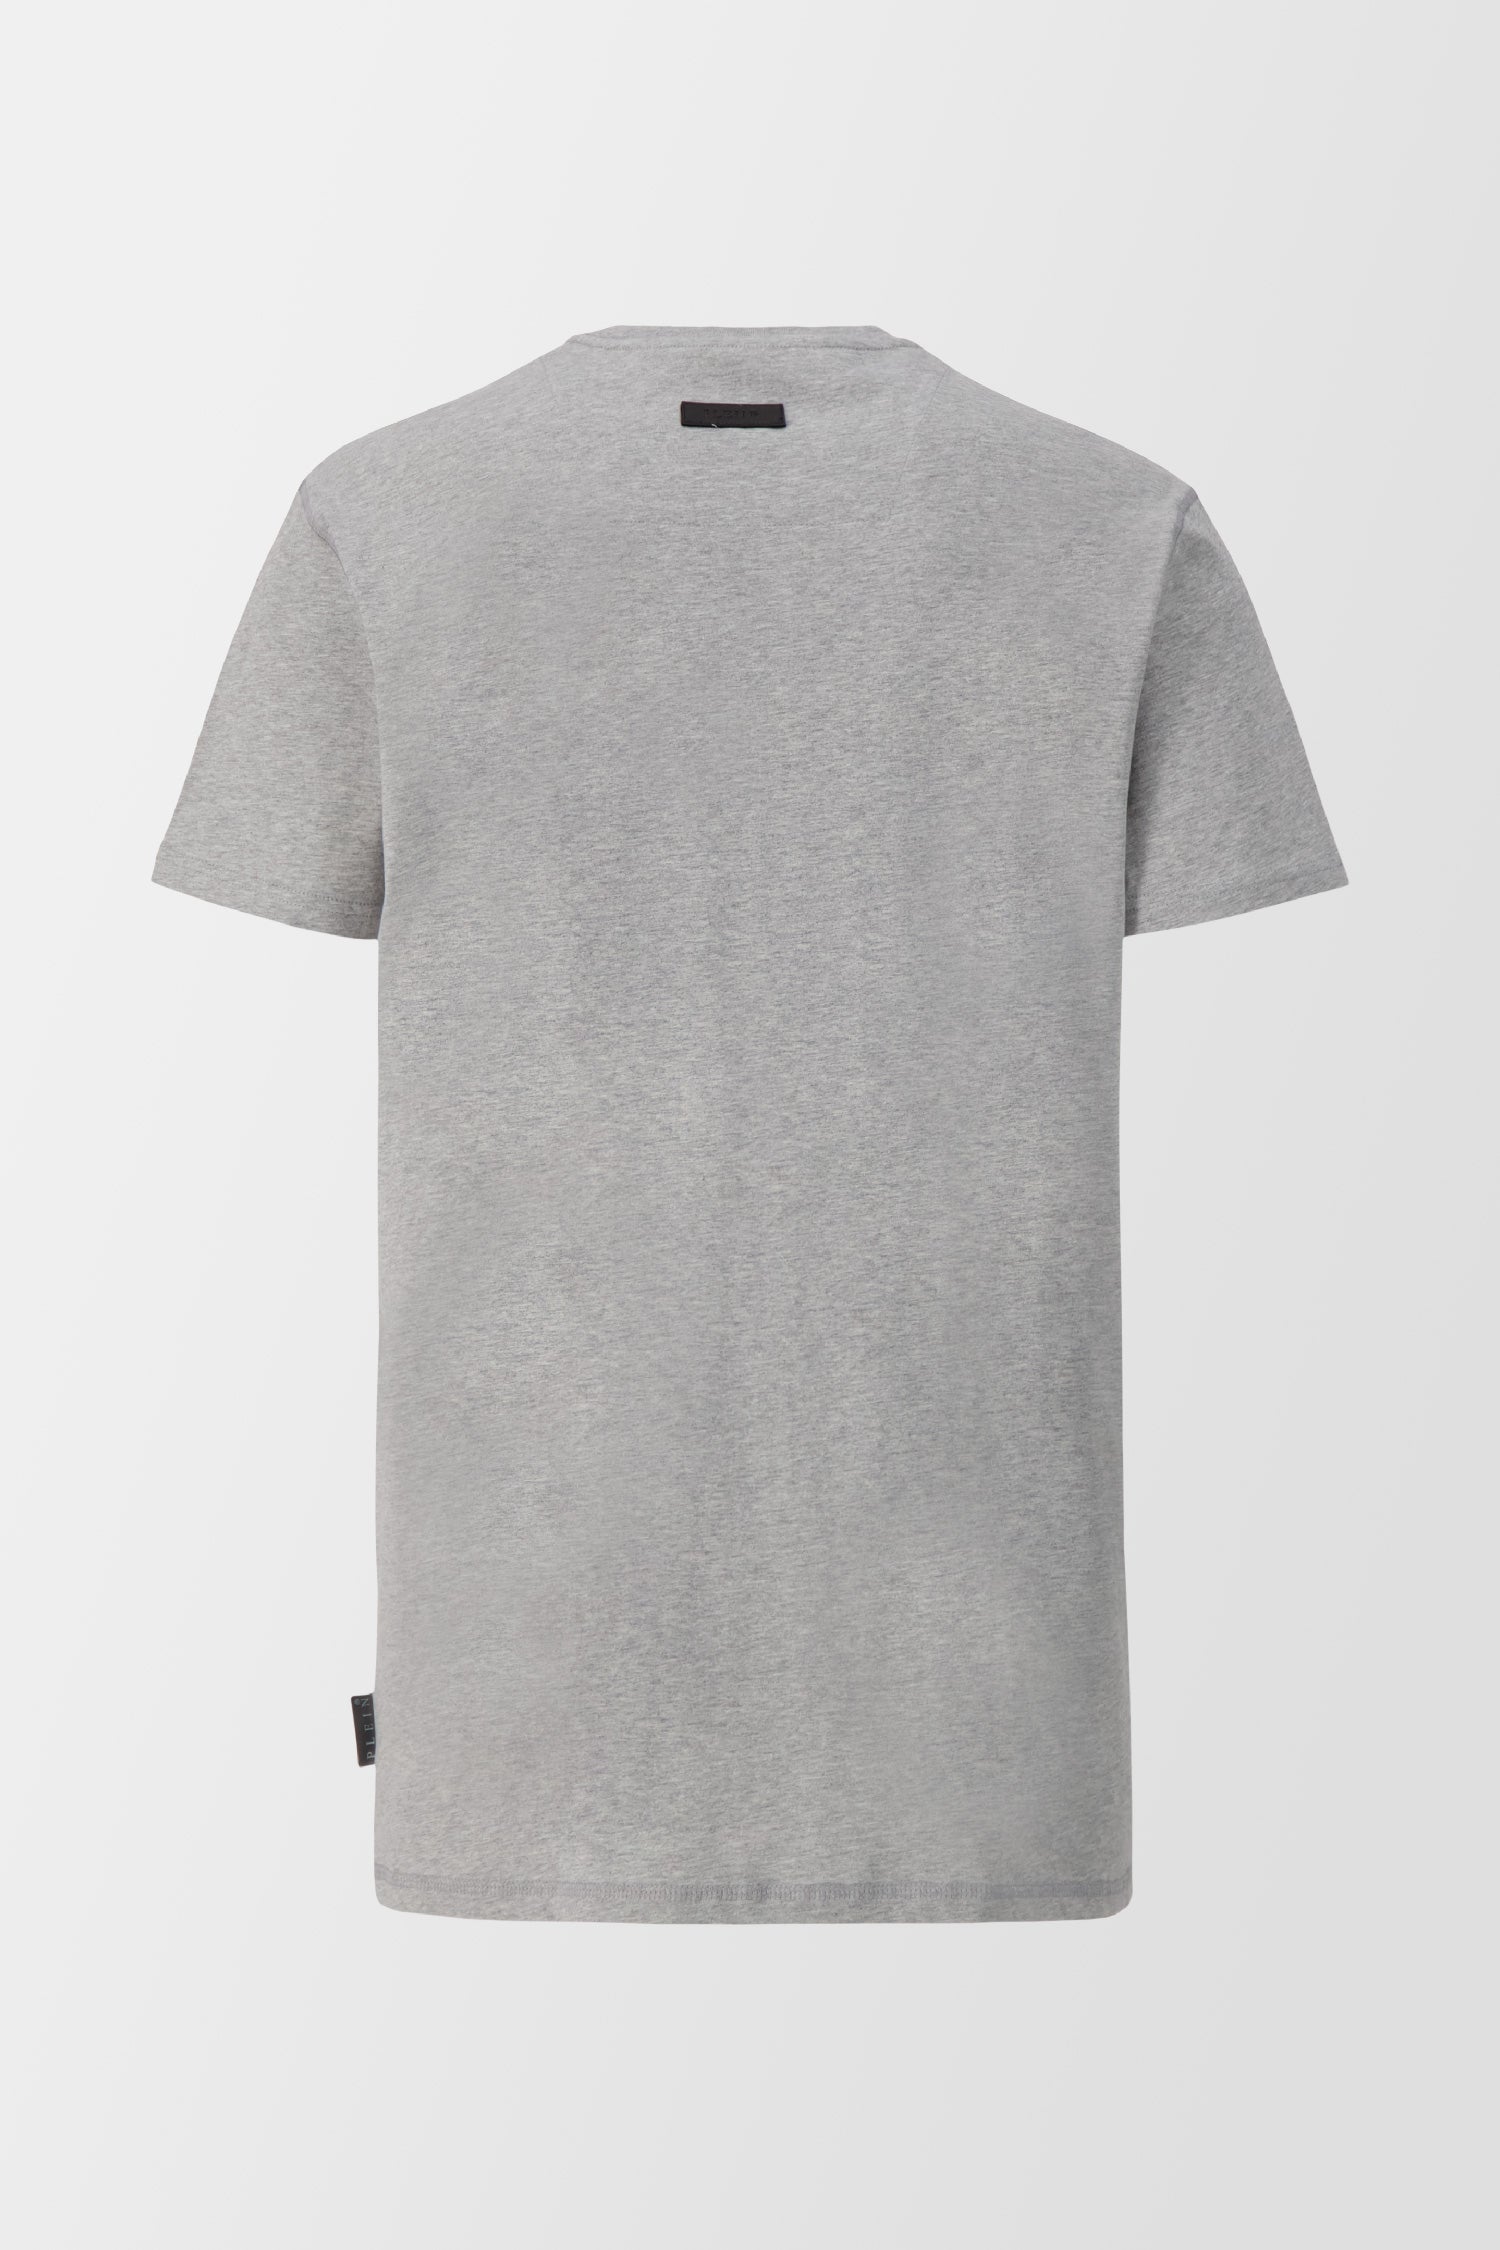 Philipp Plein Grey Iconic Plein T-Shirt